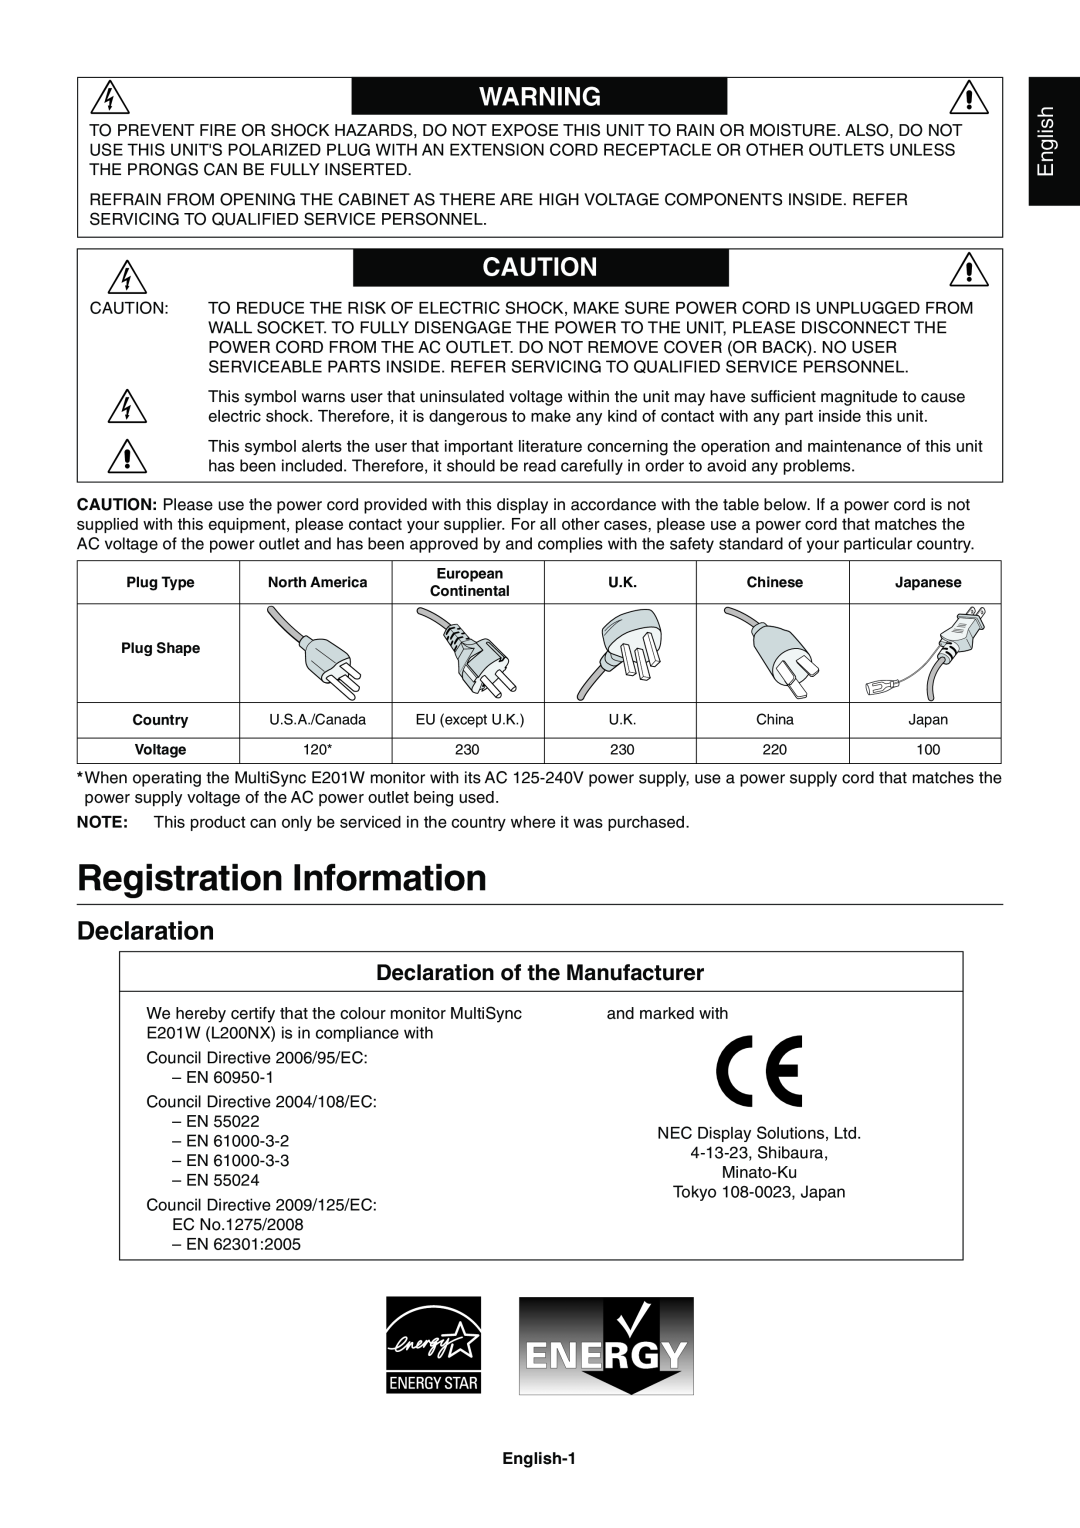 NEC E201W user manual Registration Information, Declaration of the Manufacturer, English 